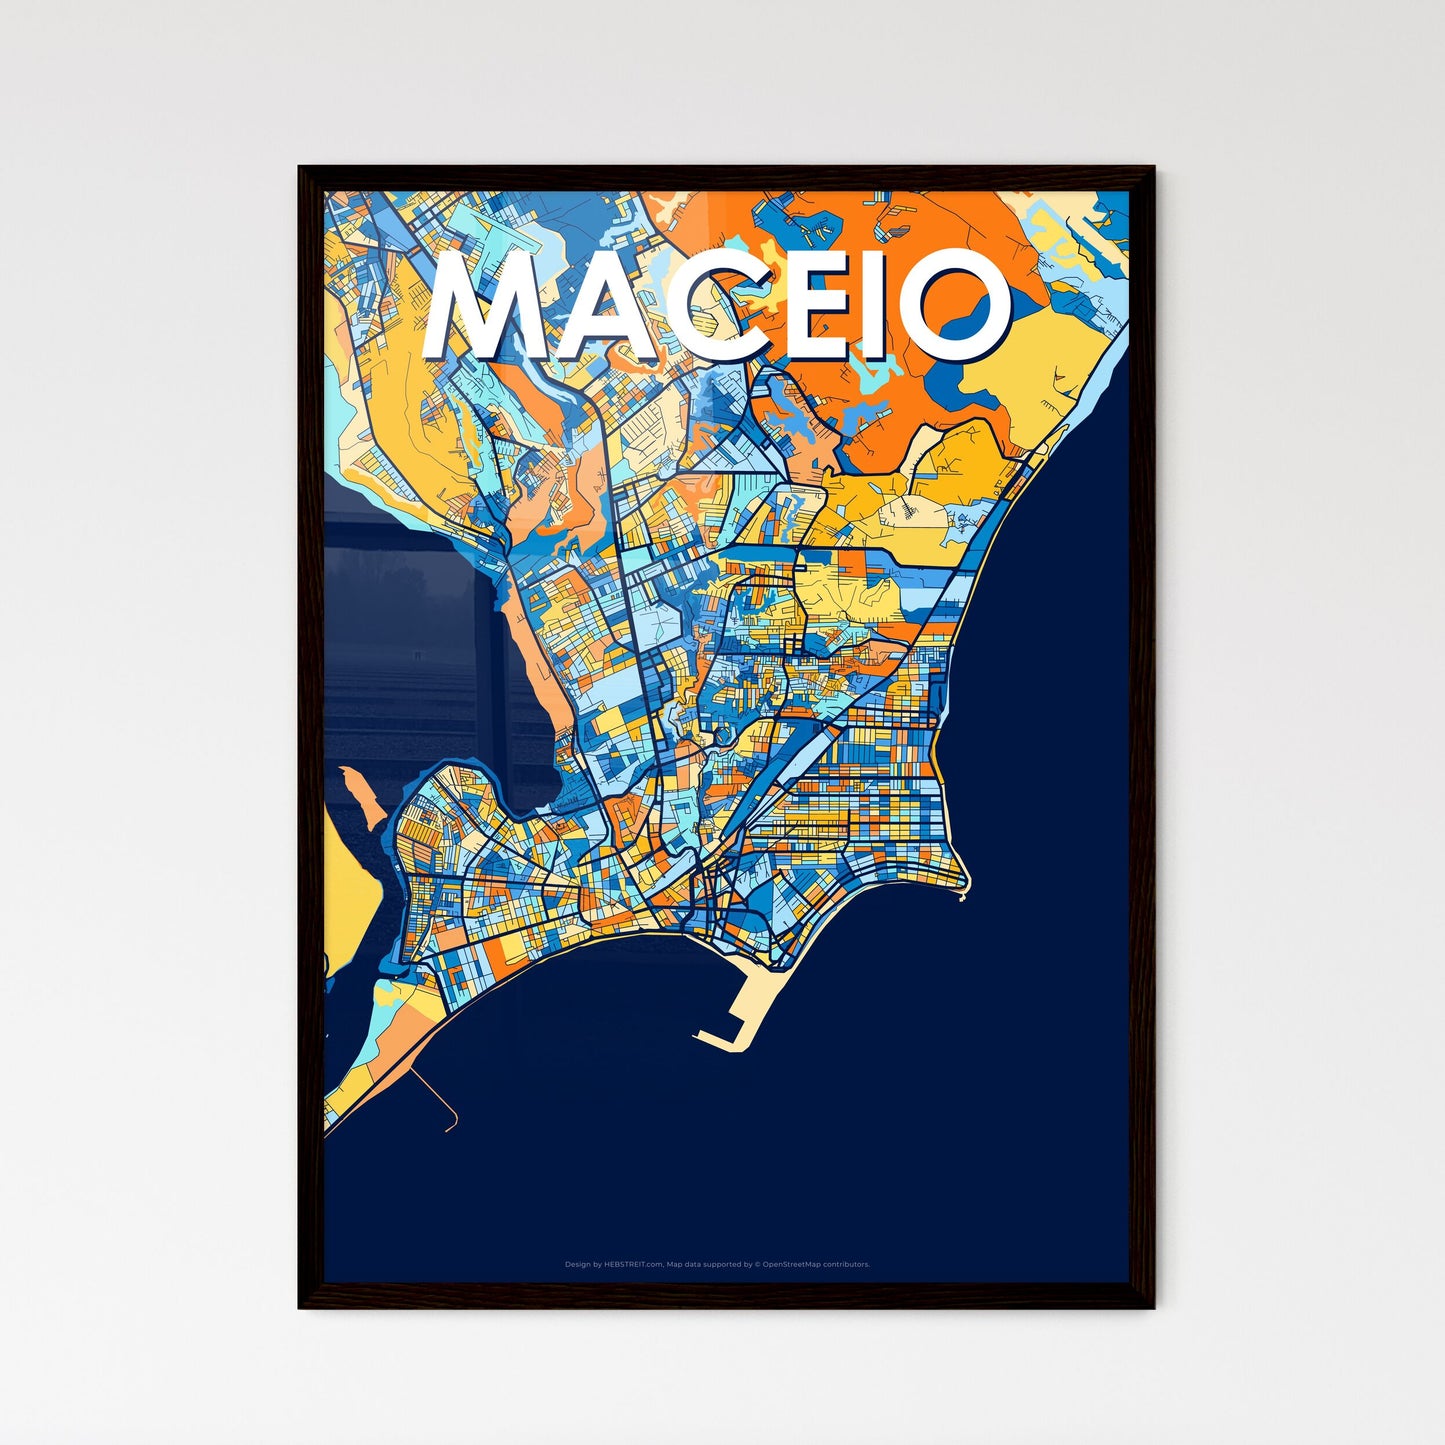 MACEIO BRAZIL Vibrant Colorful Art Map Poster Blue Orange